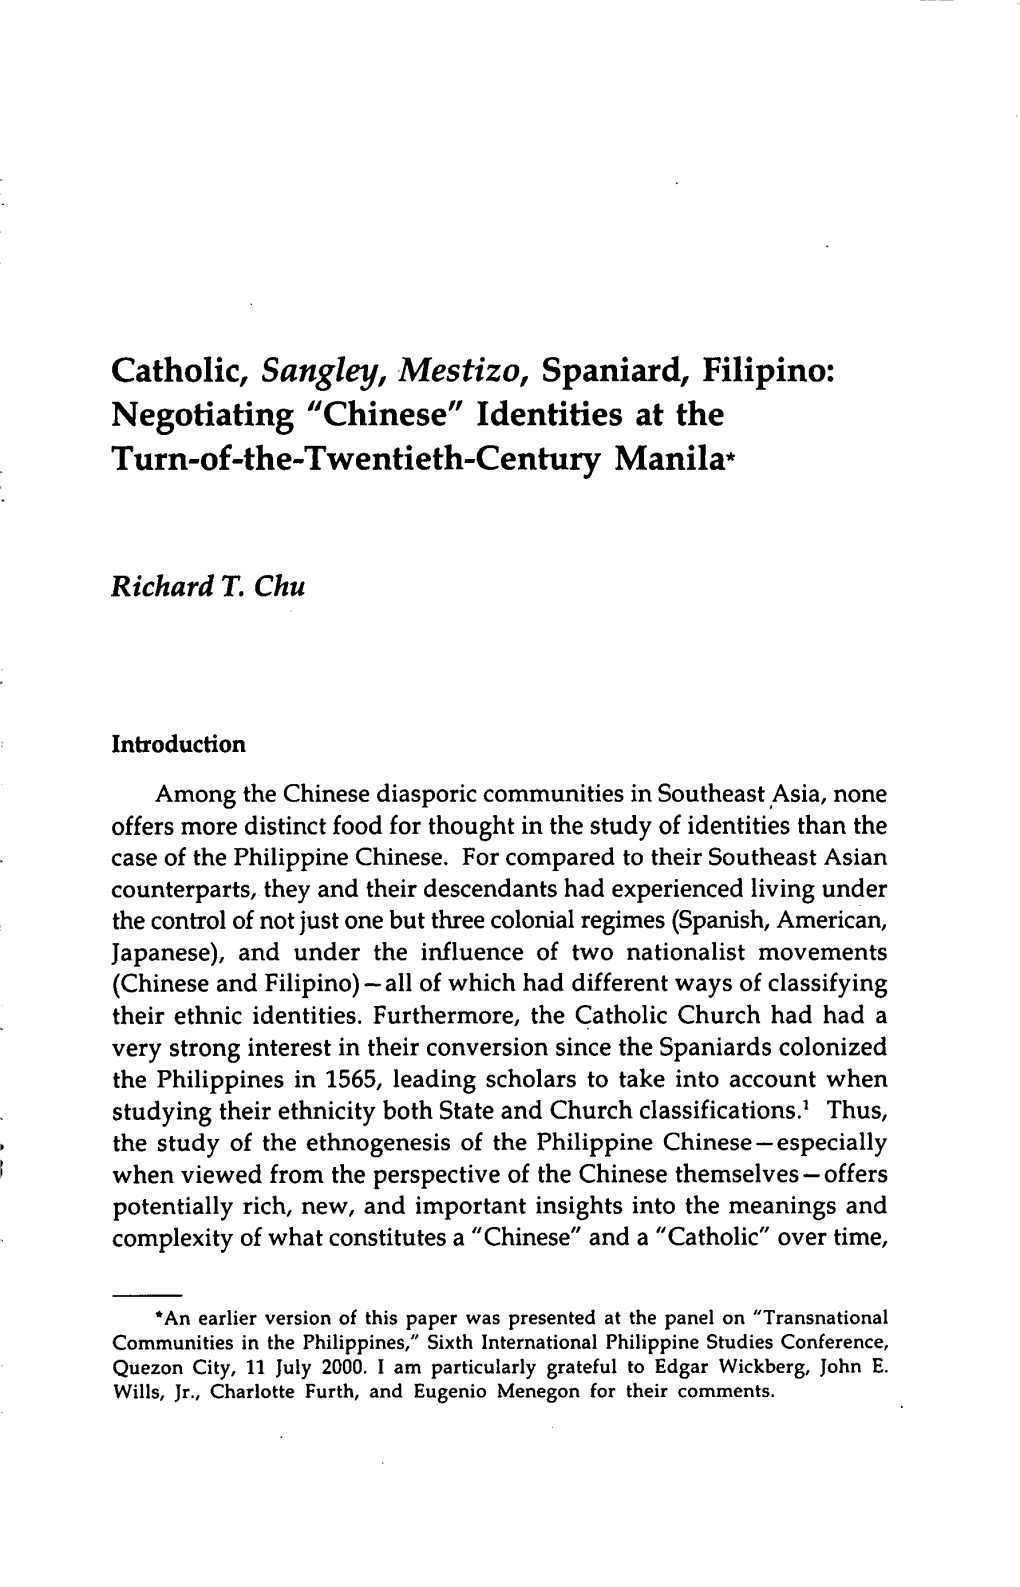 Catholic, Sangley, Mestizo, Spaniard, Filipino: Negotiating "Chinese" Identities at the Turn-Of-The-Twentieth-Century Manila